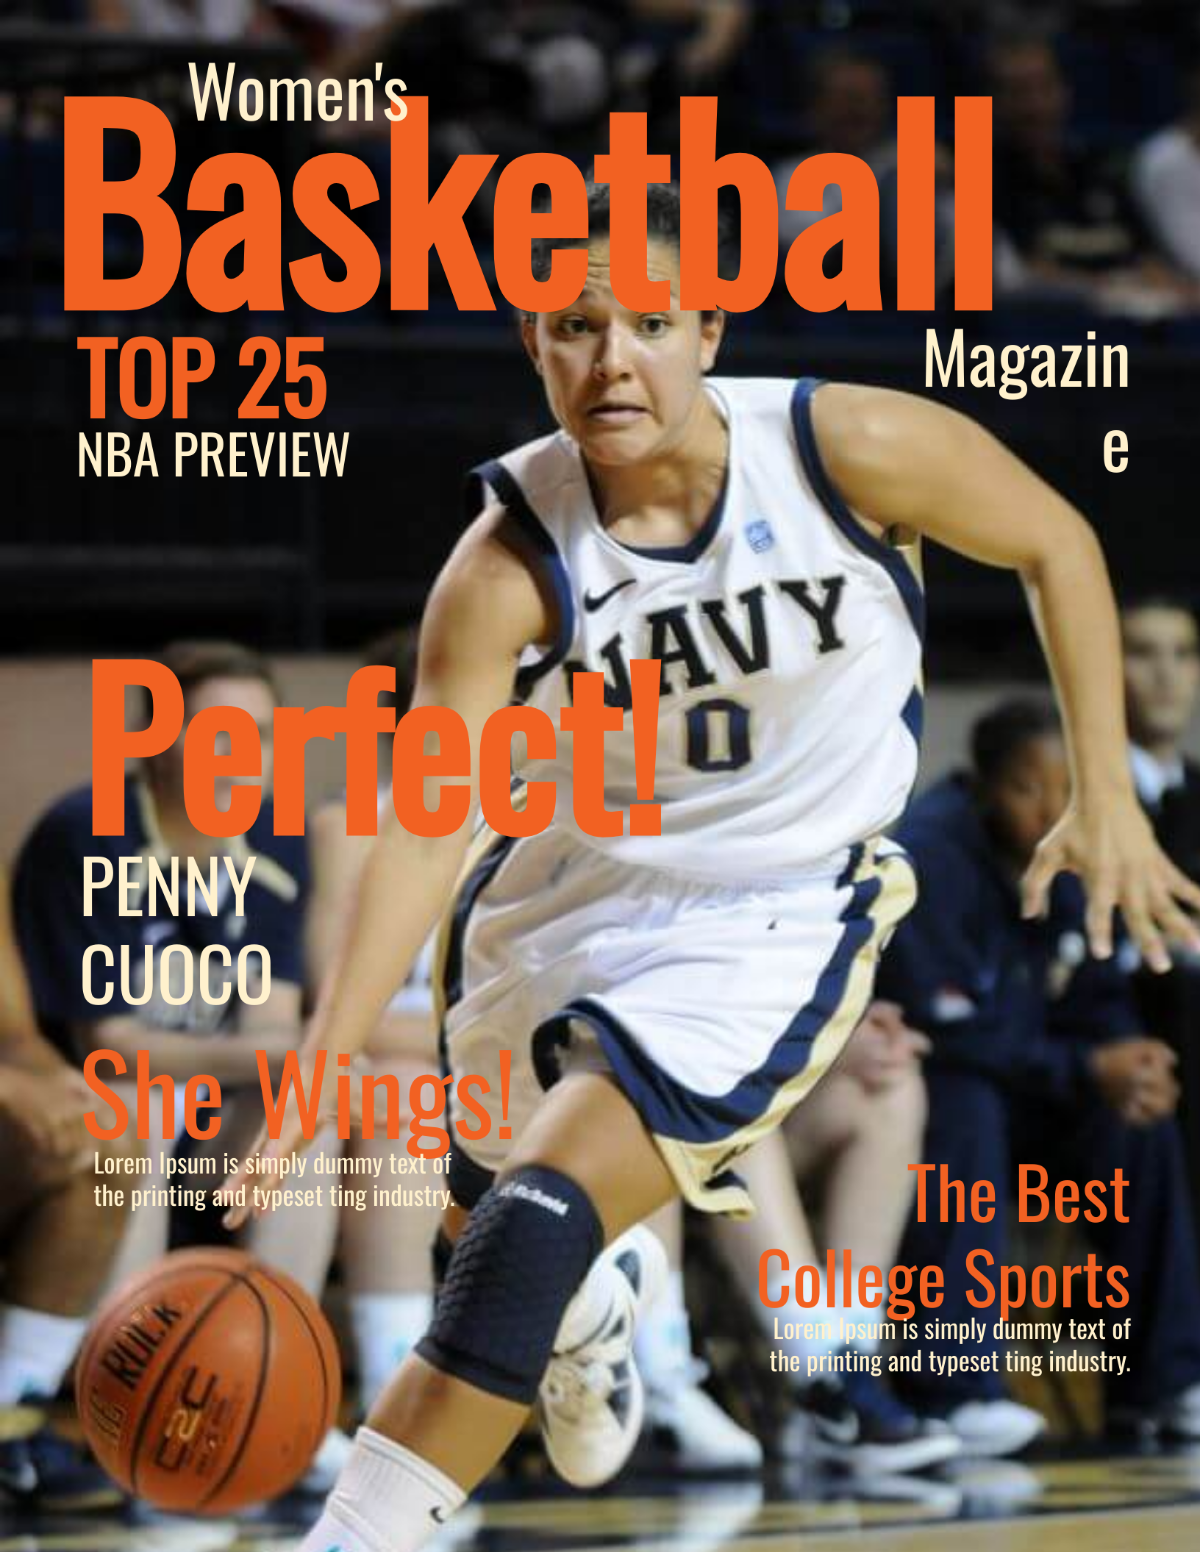 Basketball Magazine Cover Template